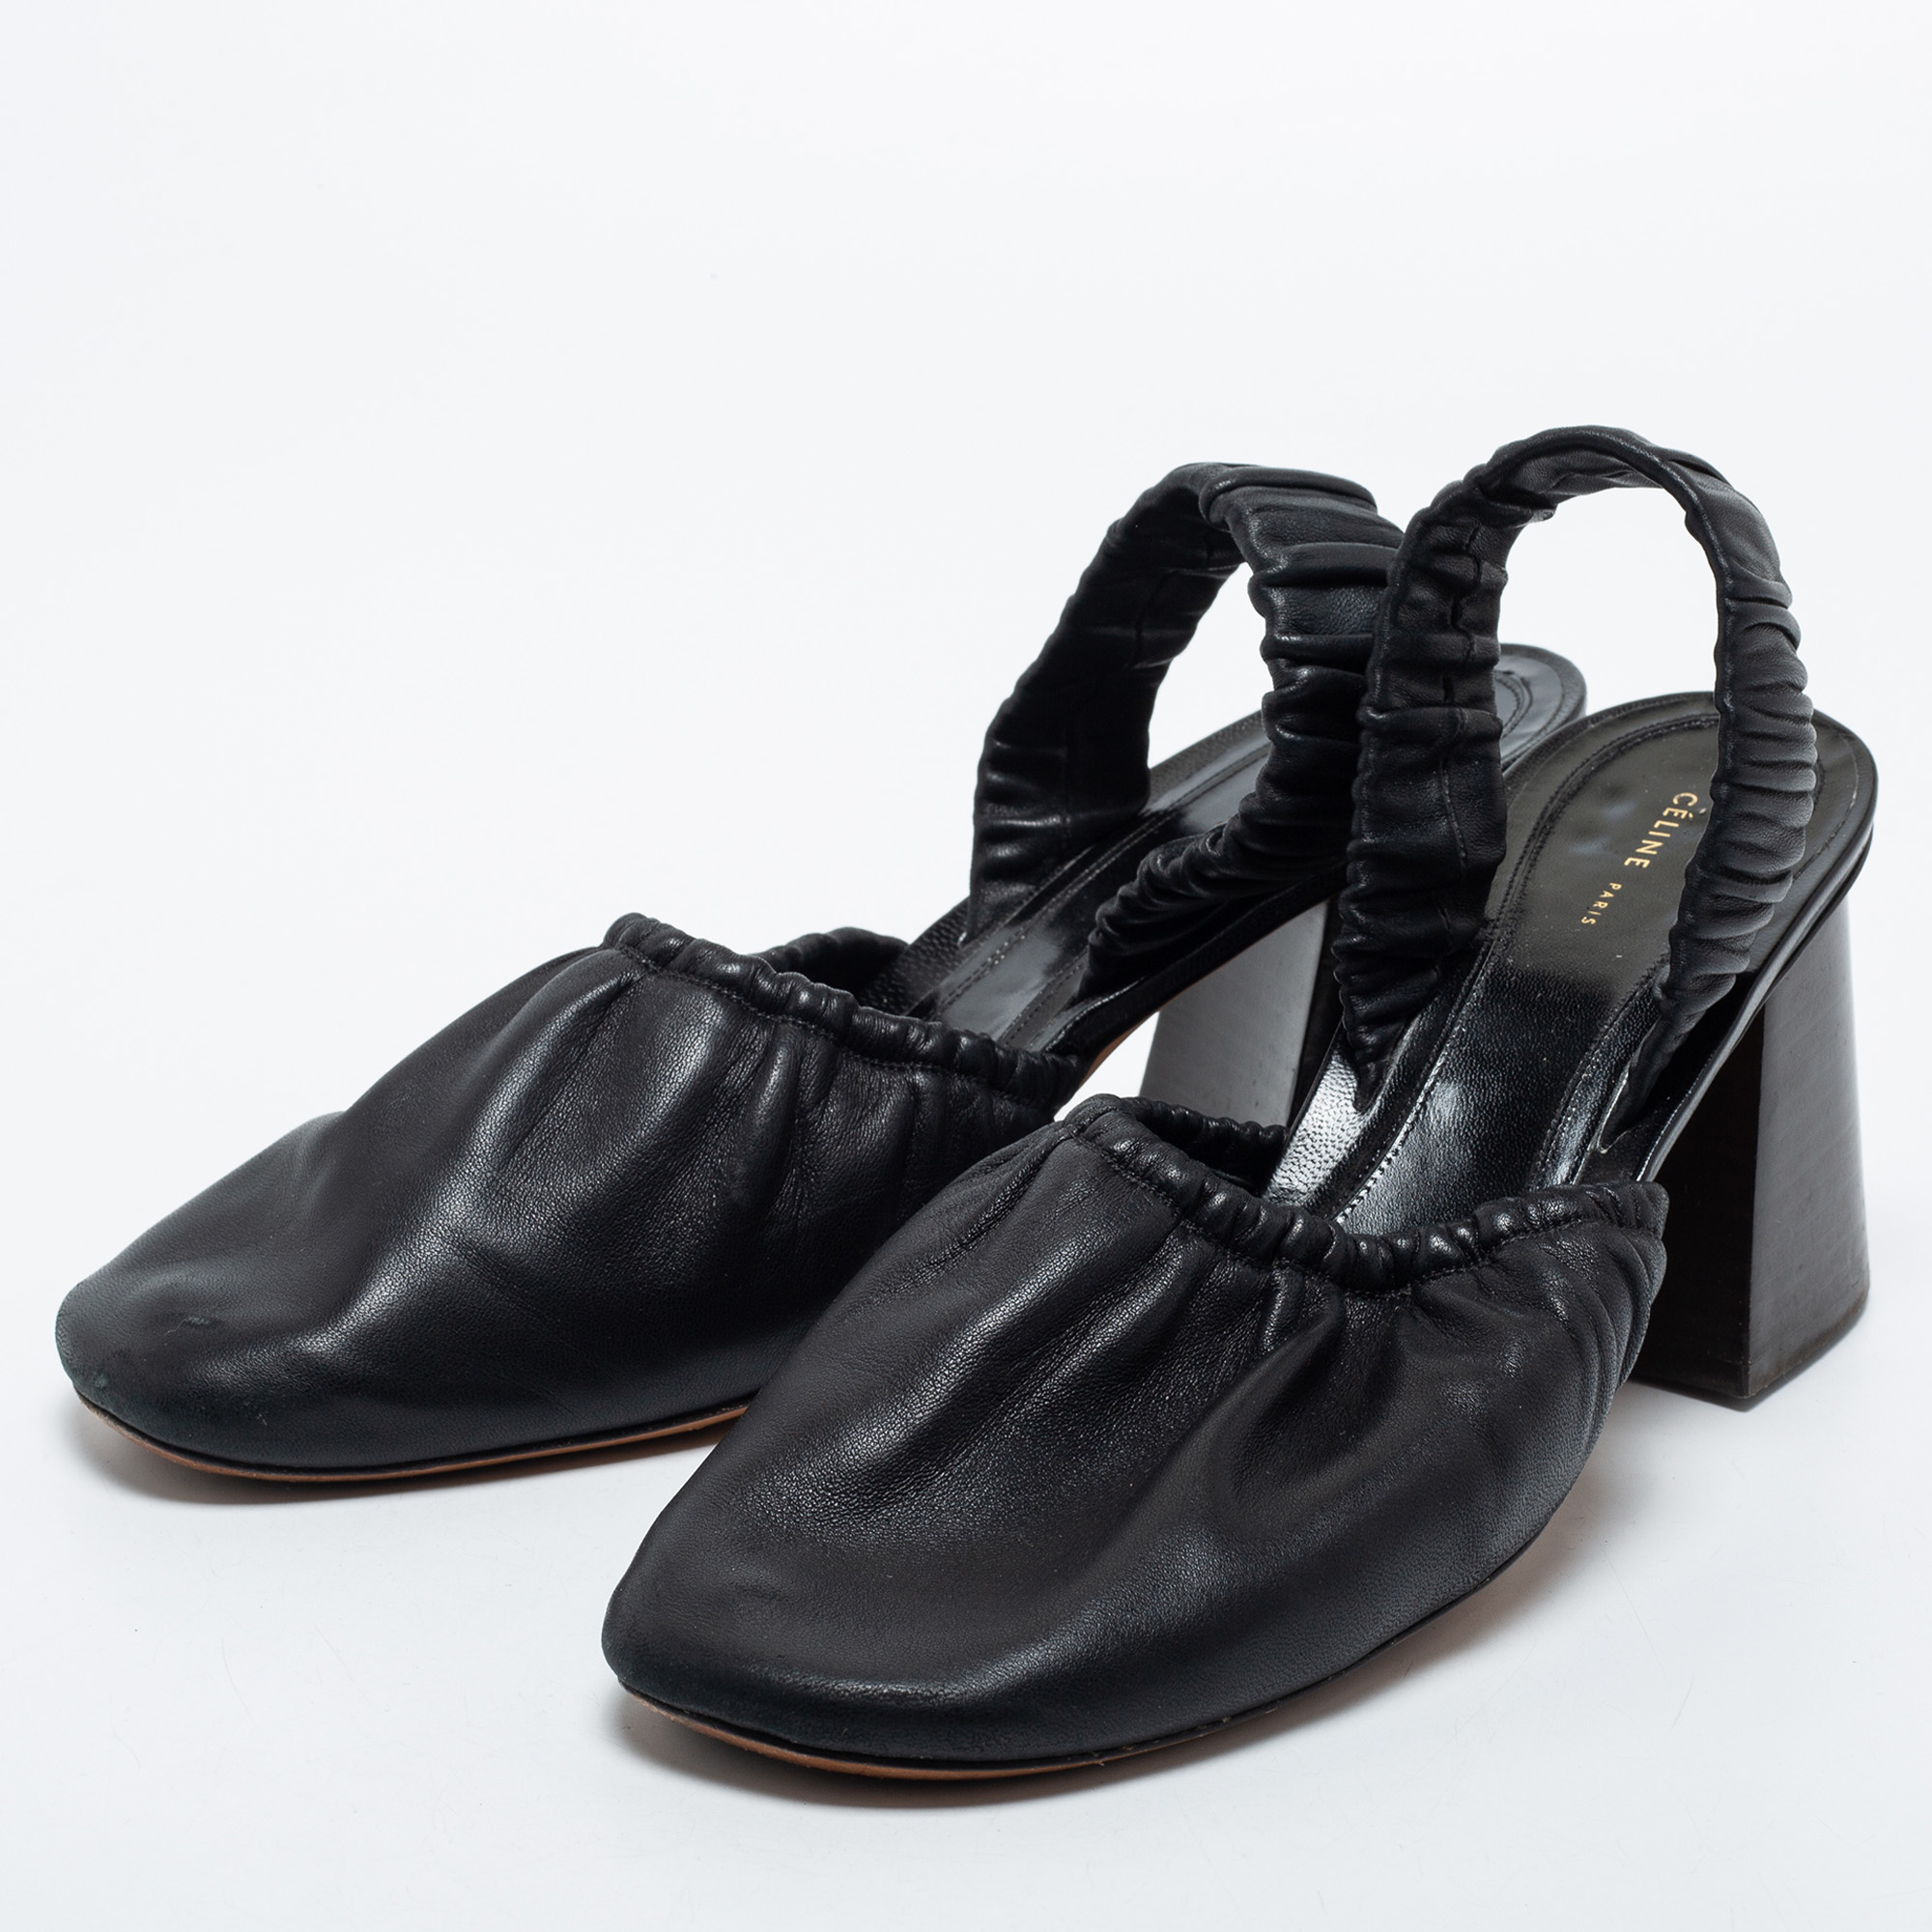 

Céline Black Leather Block Heel Sandals Size